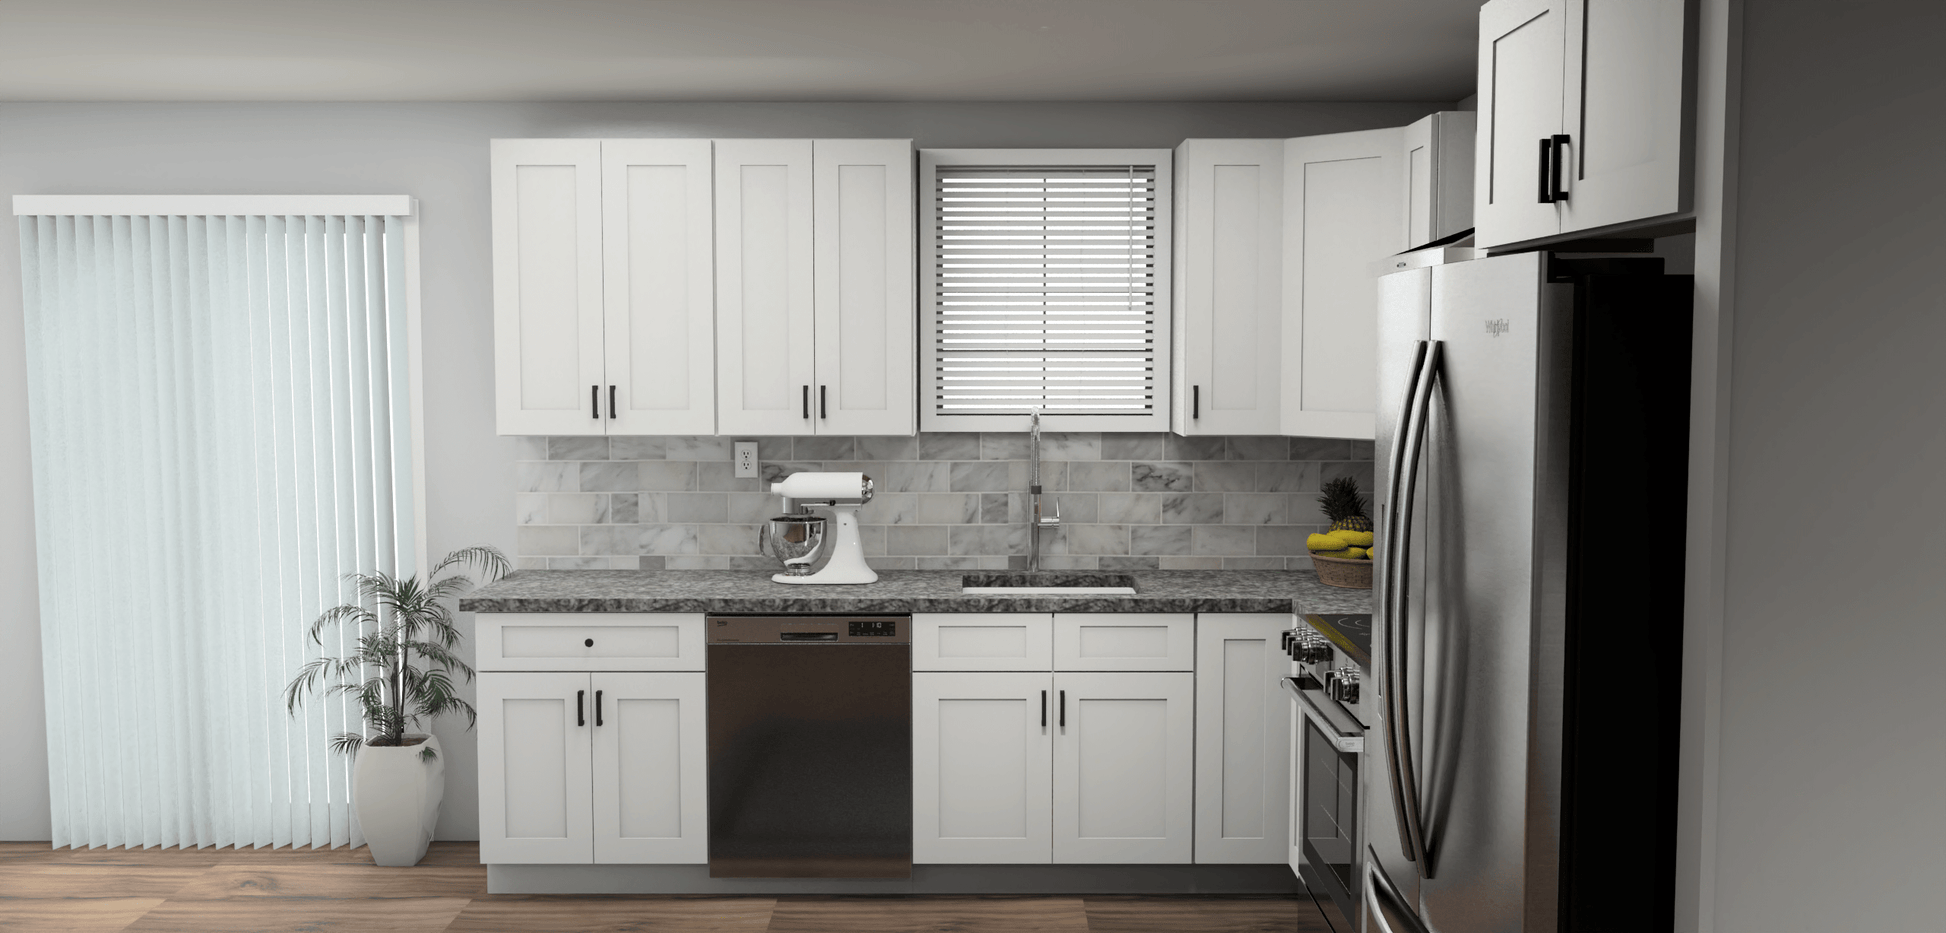 Fabuwood Allure Galaxy Frost 10 x 11 L Shaped Kitchen Side Layout Photo